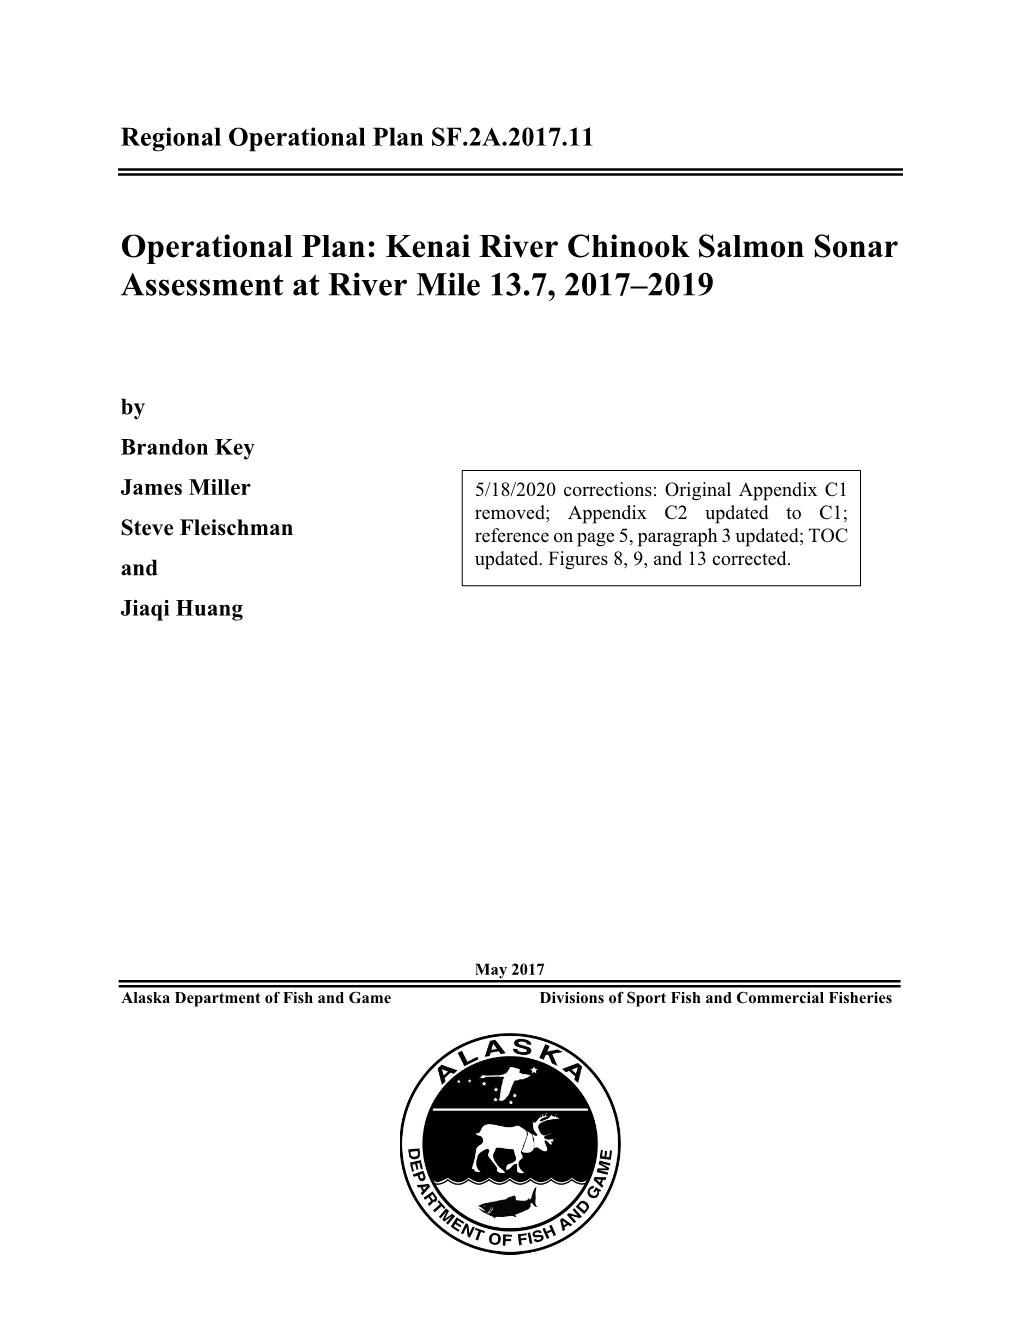 Operational Plan: Kenai River Chinook Salmon Sonar Assessment at River Mile 13.7, 2017–2019